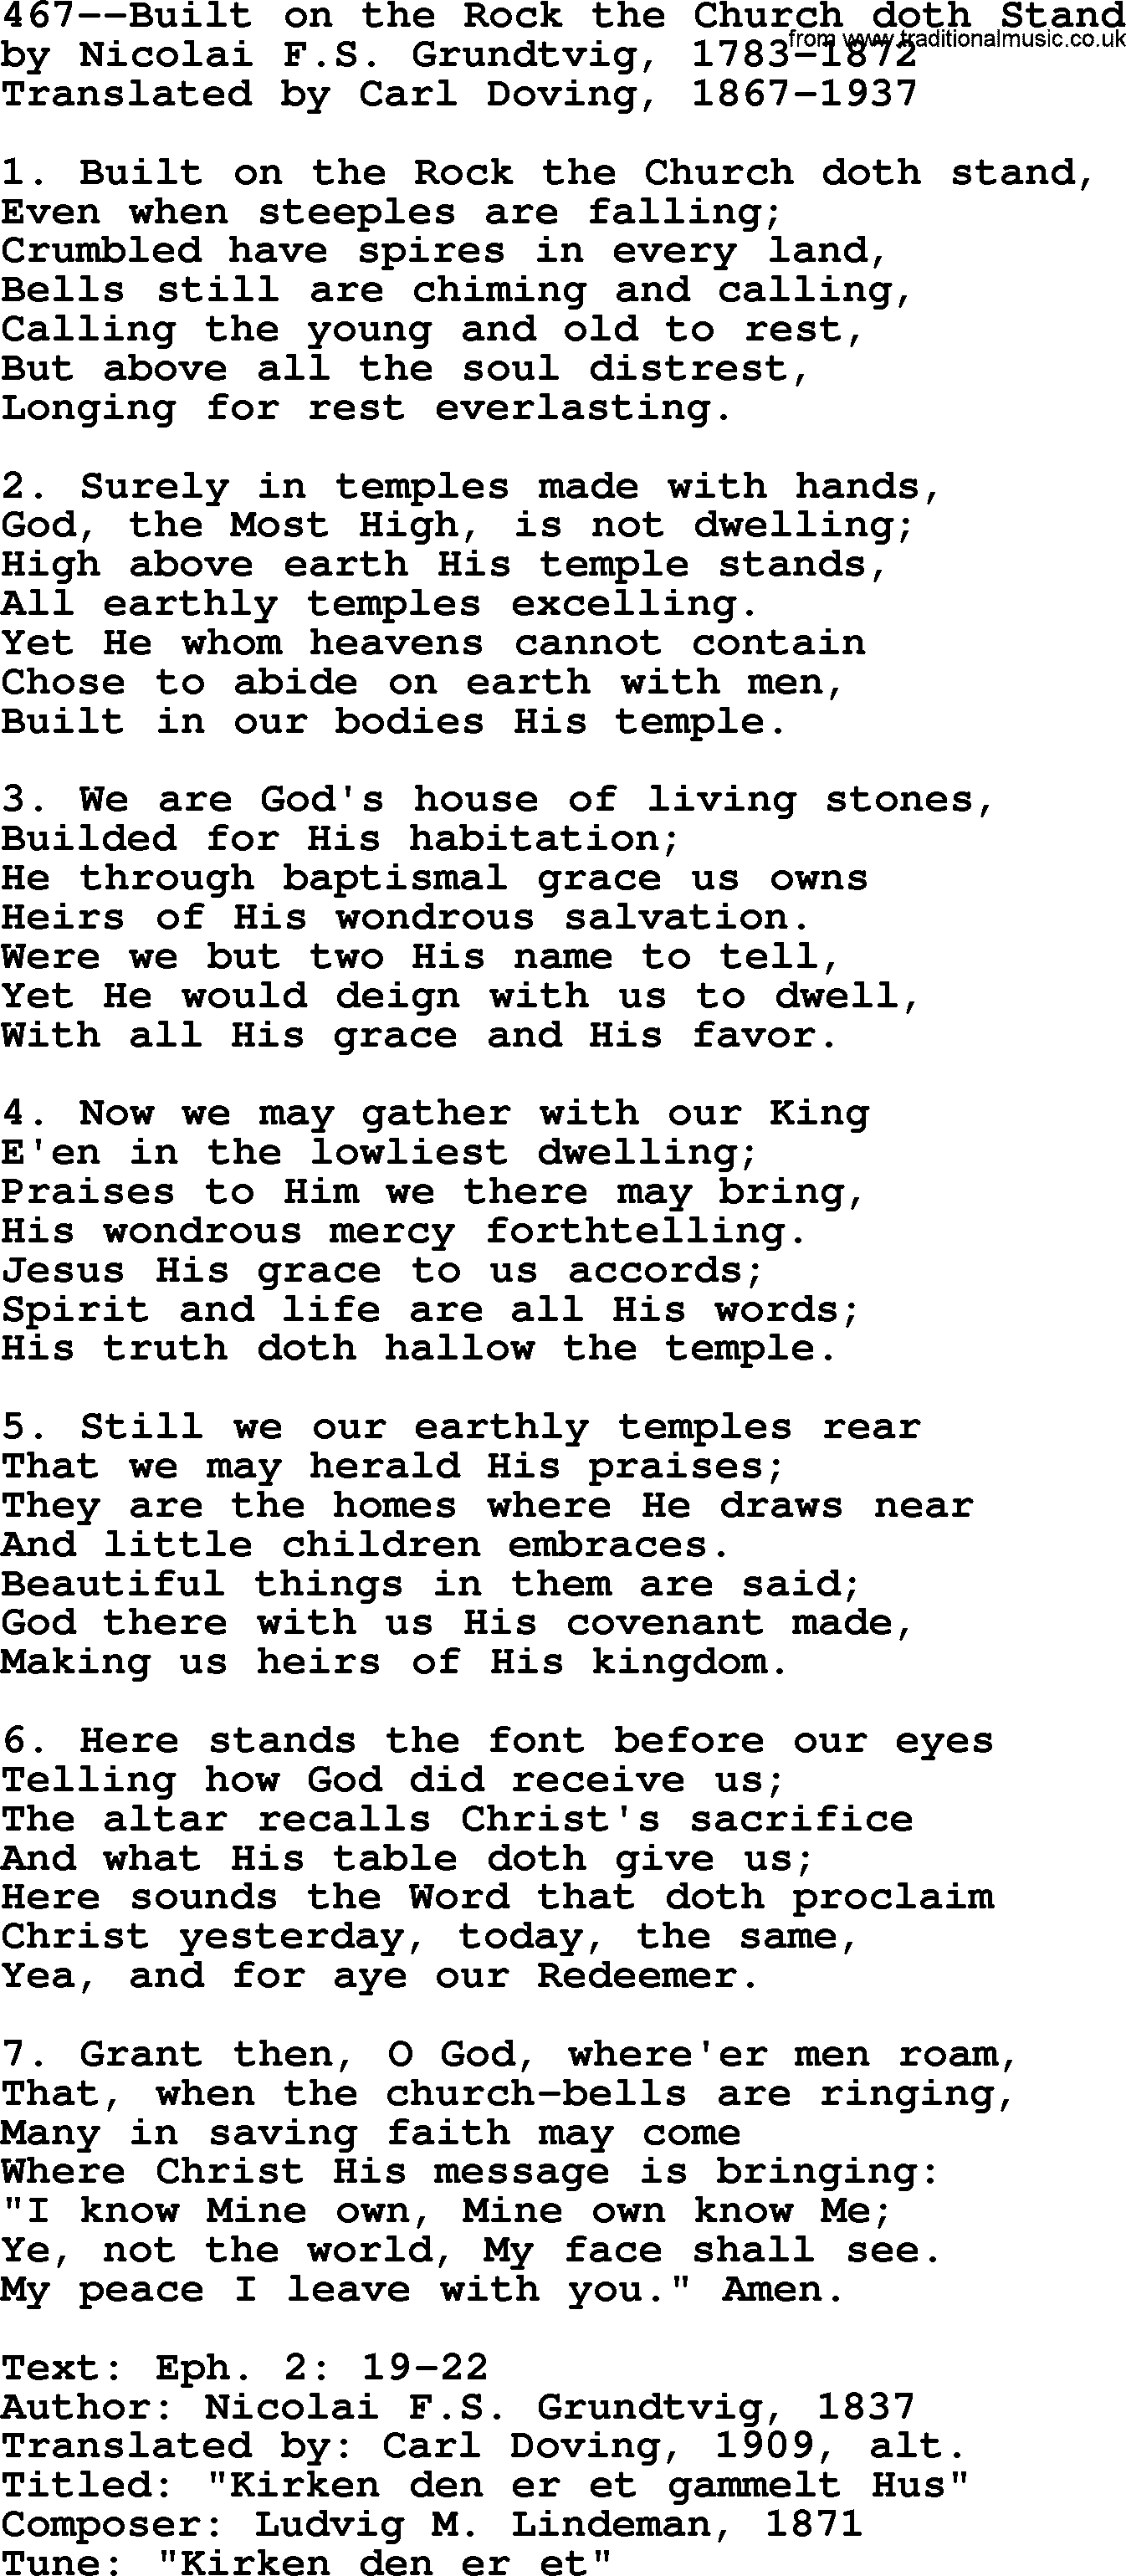 Lutheran Hymn: 467--Built on the Rock the Church doth Stand.txt lyrics with PDF